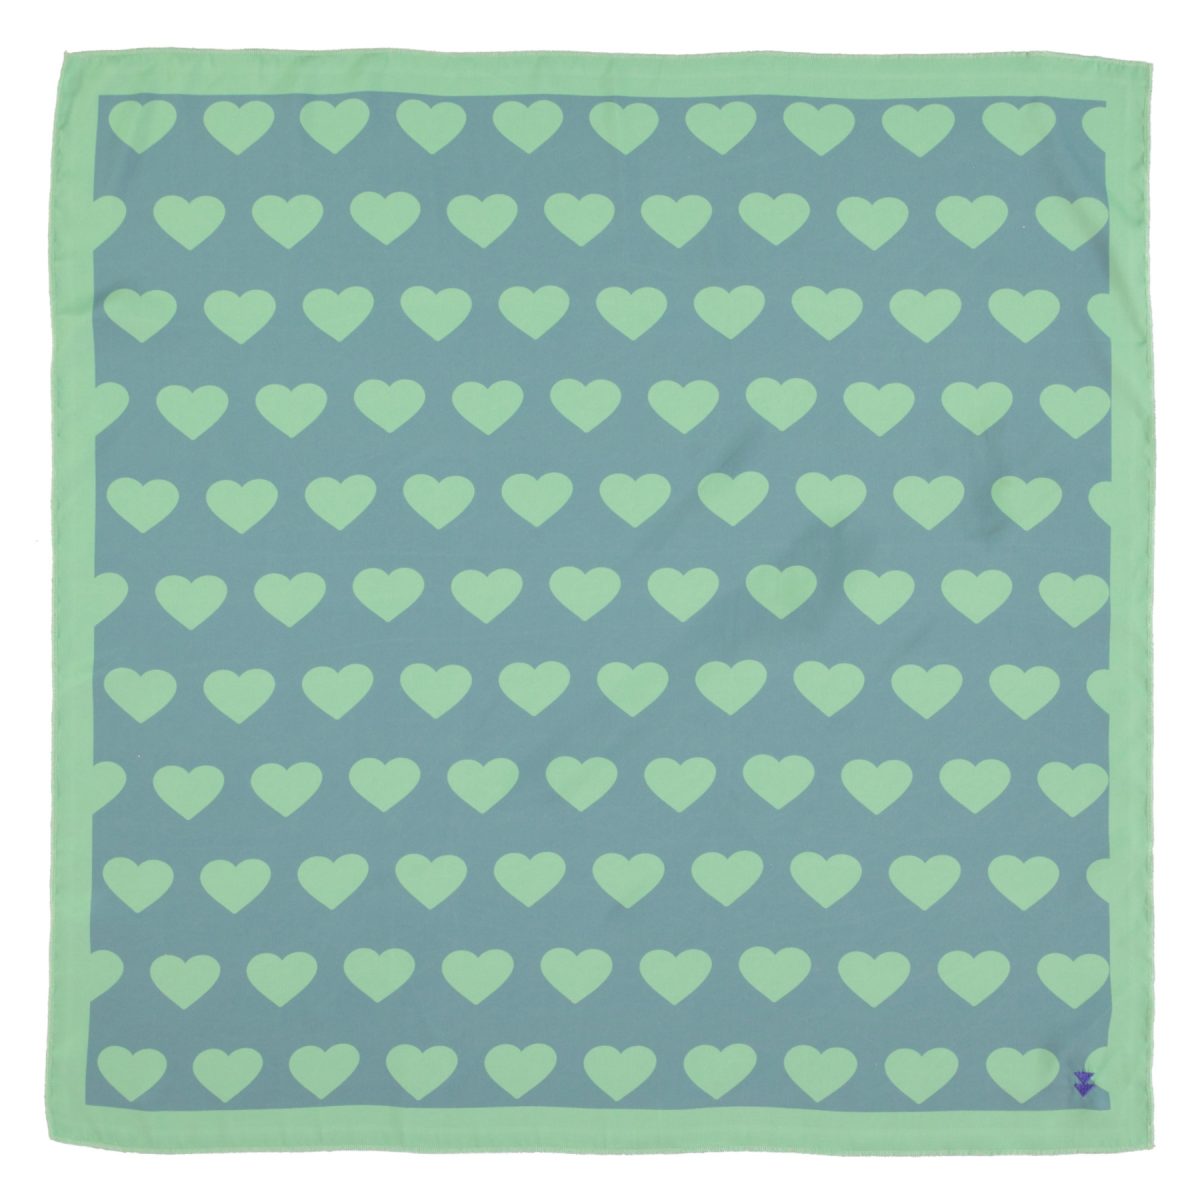 Silky bandana grey w green hearts sisters department a